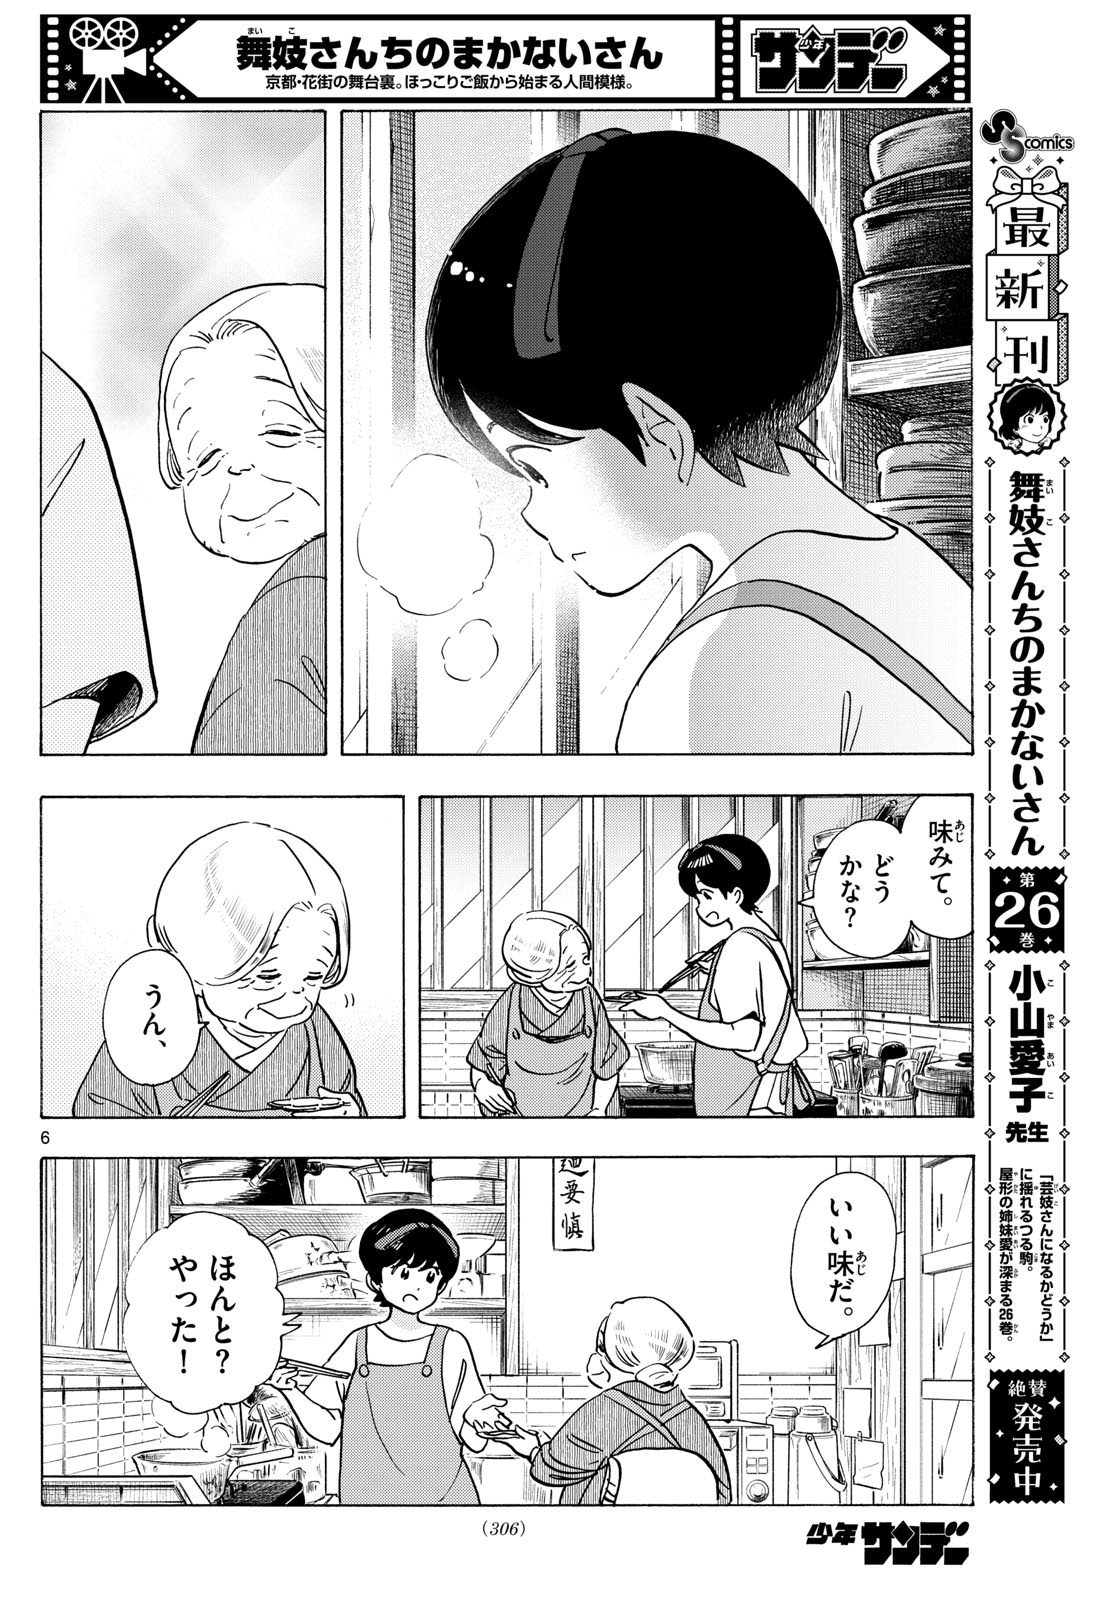 Maiko-san Chi no Makanai-san - Chapter 304 - Page 6